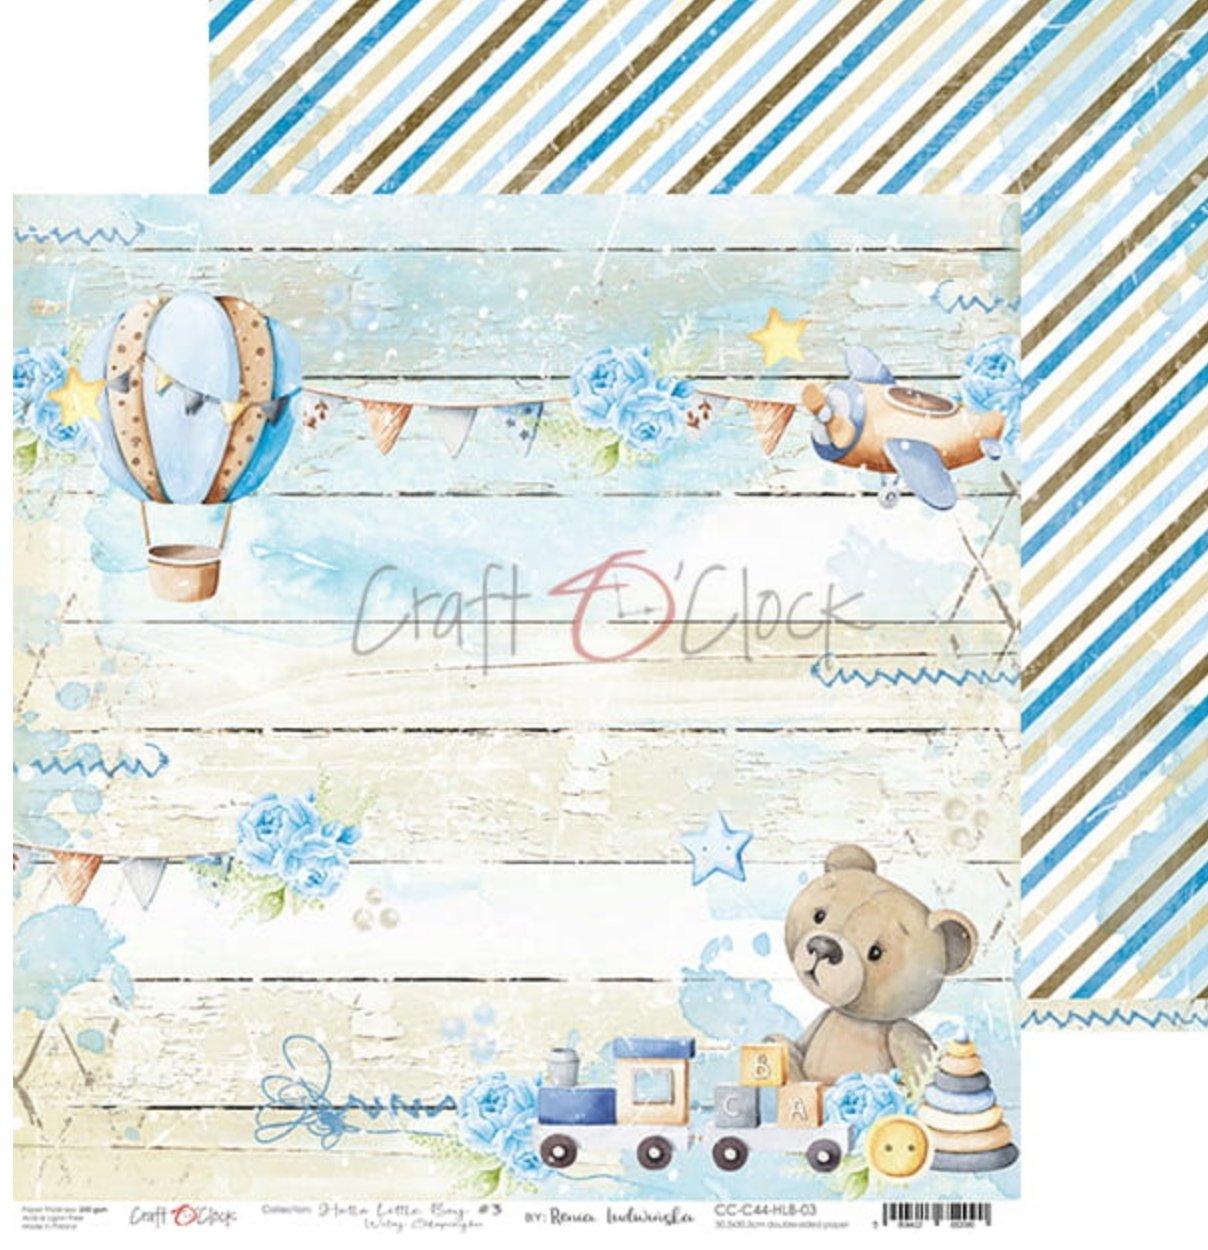 Craft O Clock - 12x12 Paper - Hello Little Boy - Baby’s First Year Craft O Clock